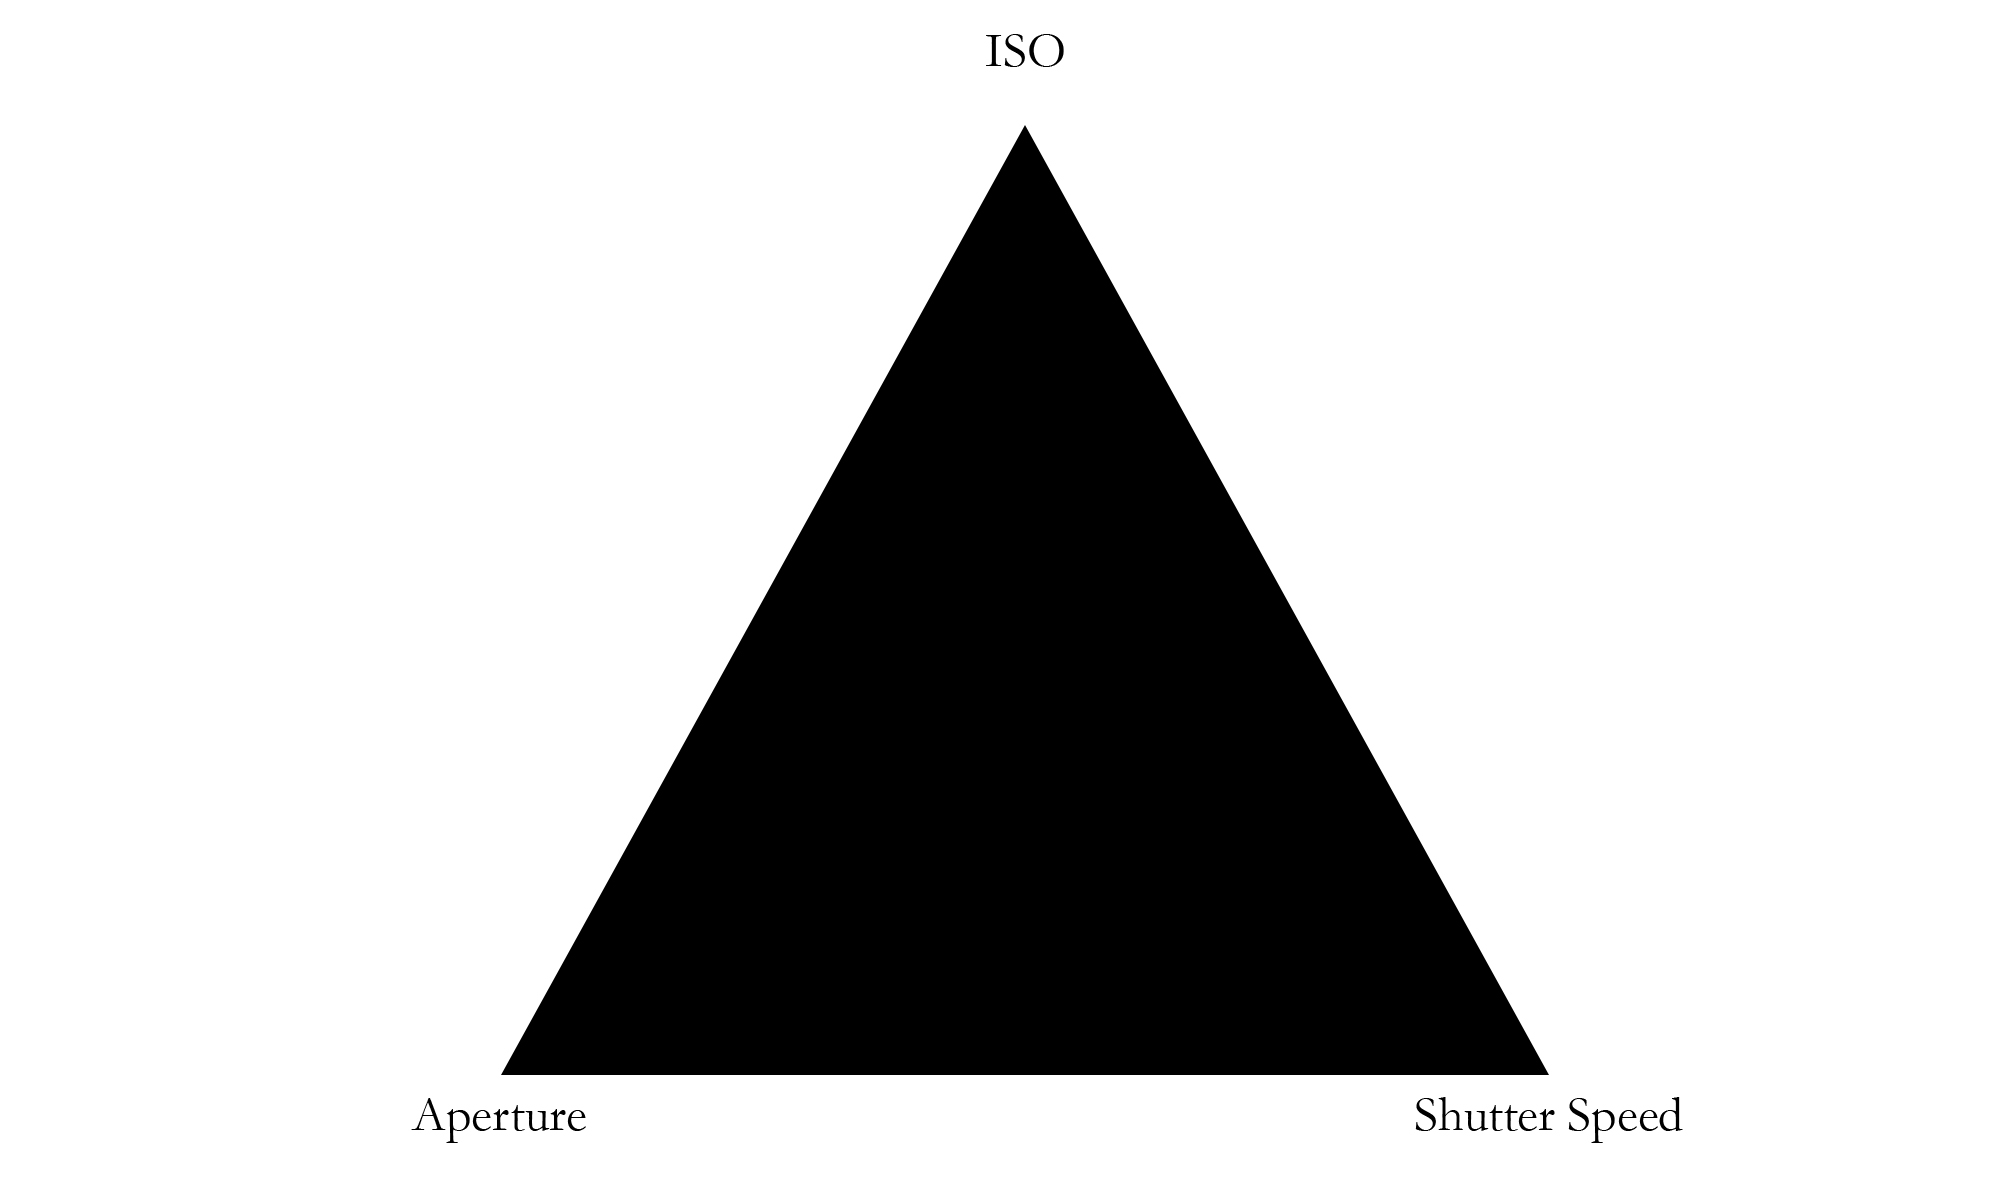 Image 002 Exposure Triangle